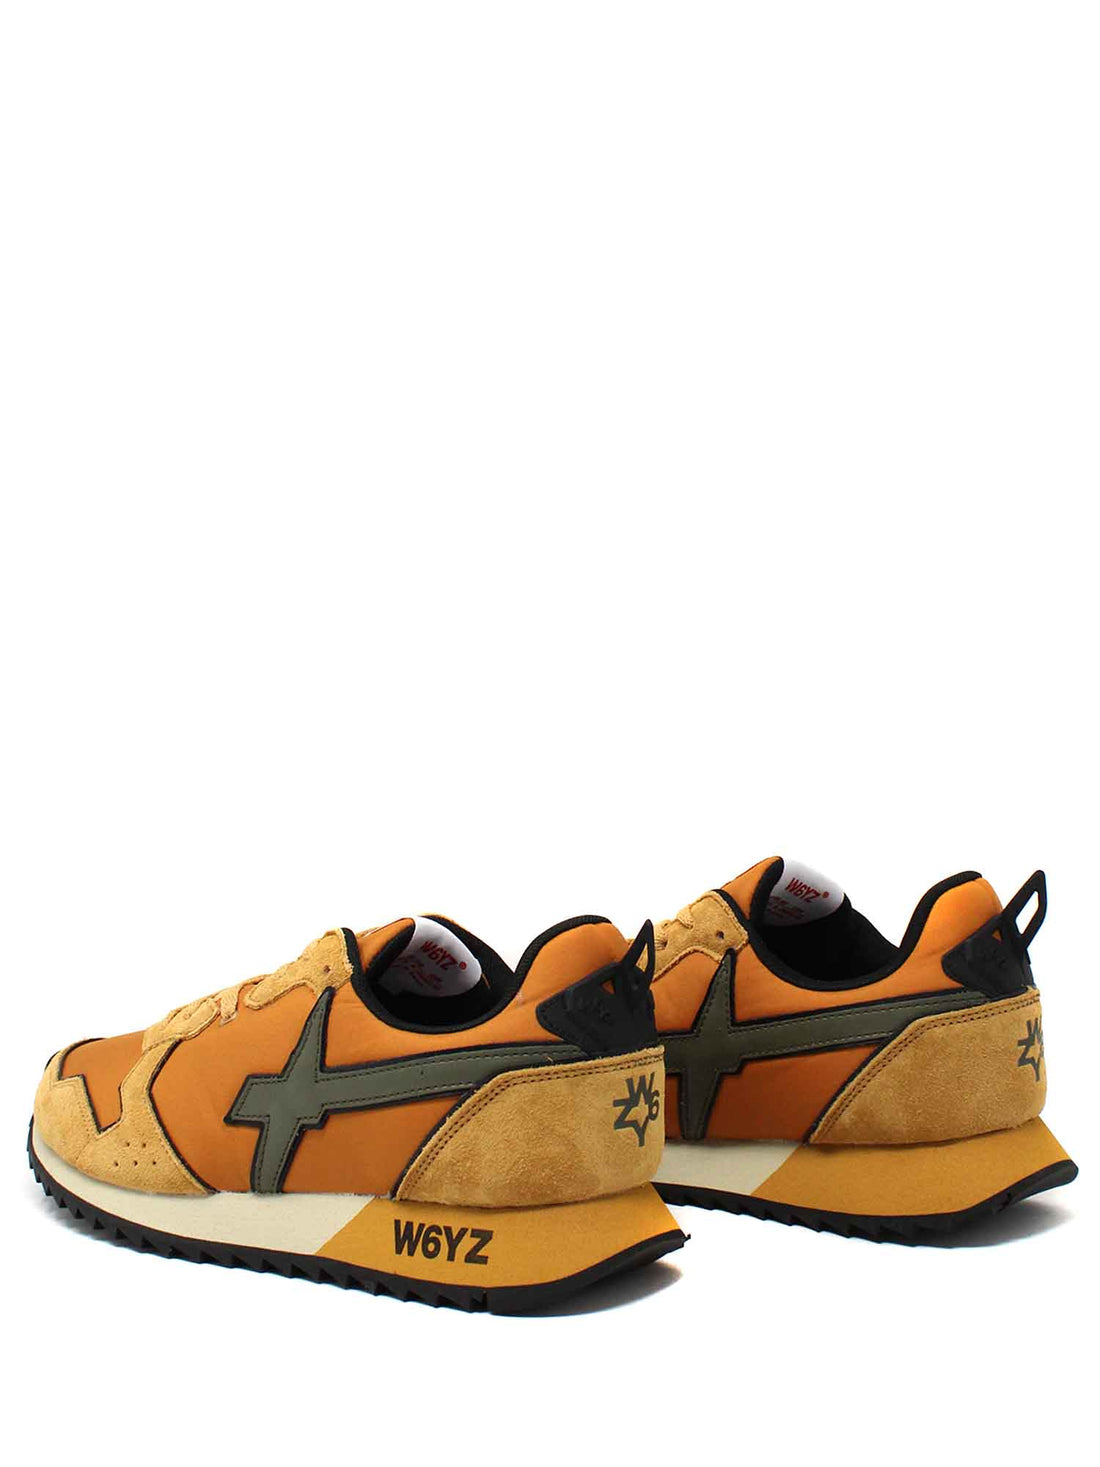 Sneakers Arancio 1g03 W6yz